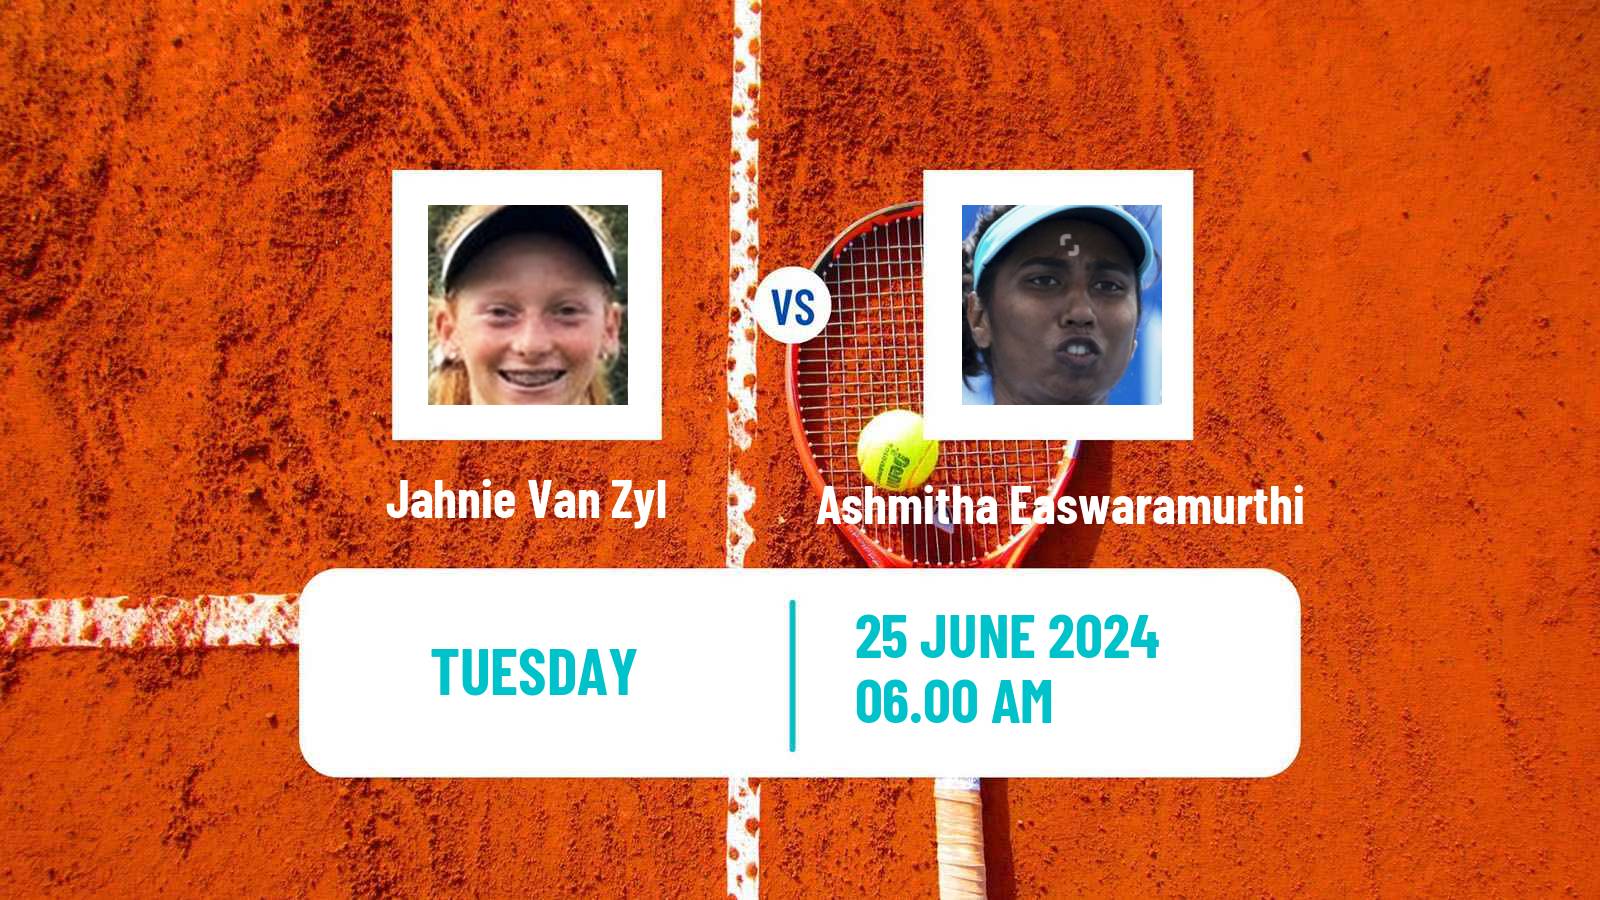 Tennis ITF W15 Hillcrest 2 Women Jahnie Van Zyl - Ashmitha Easwaramurthi